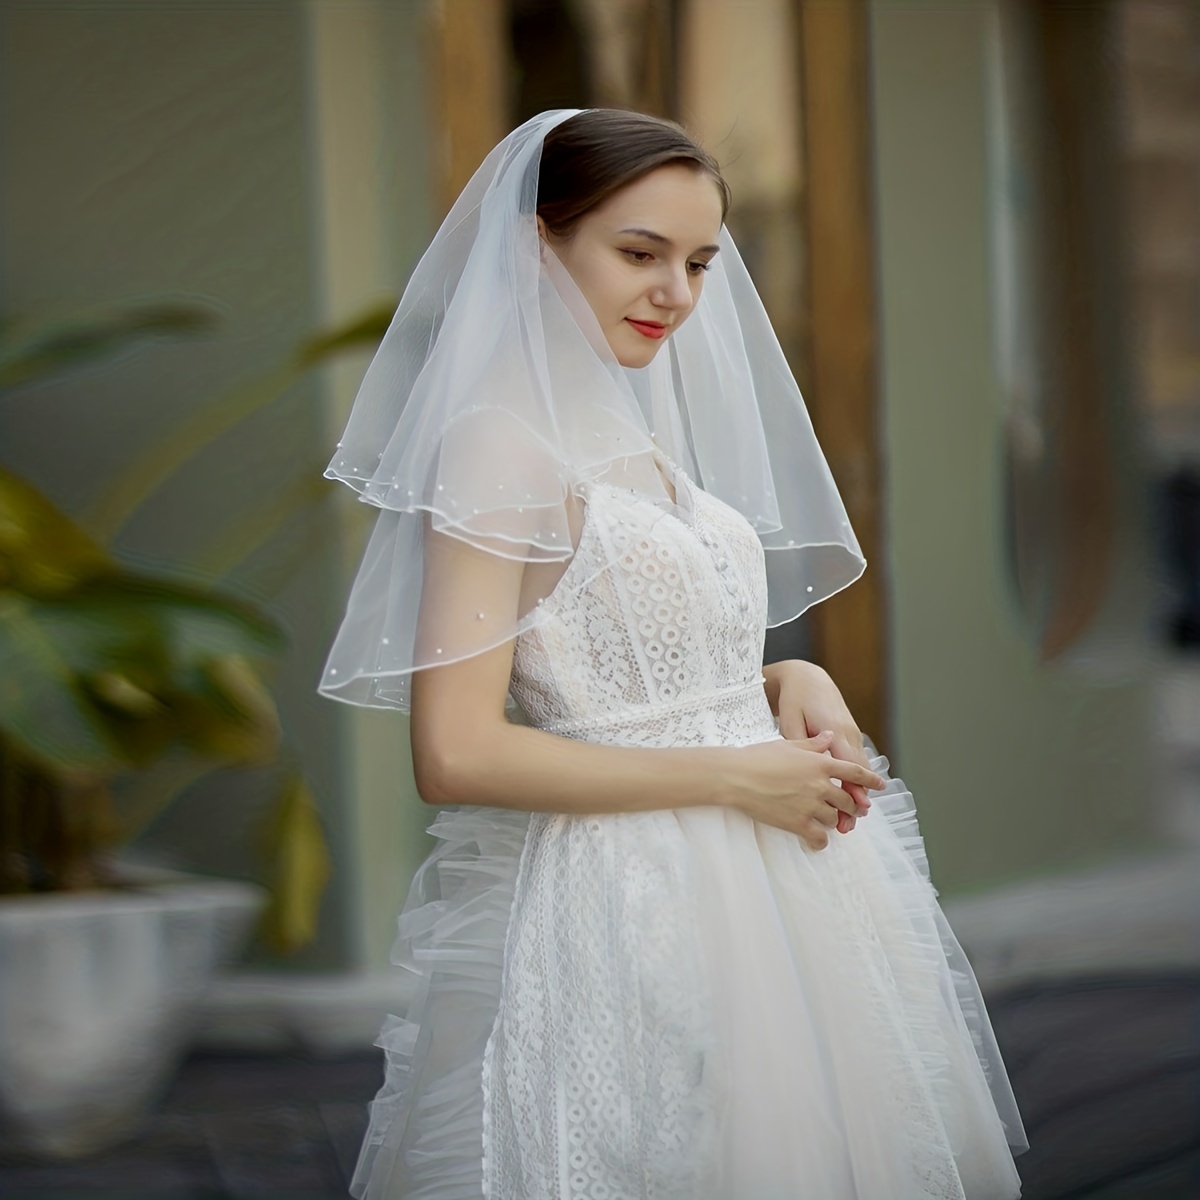 Beautiful Bride White Mesh and Satin Bridal Veil